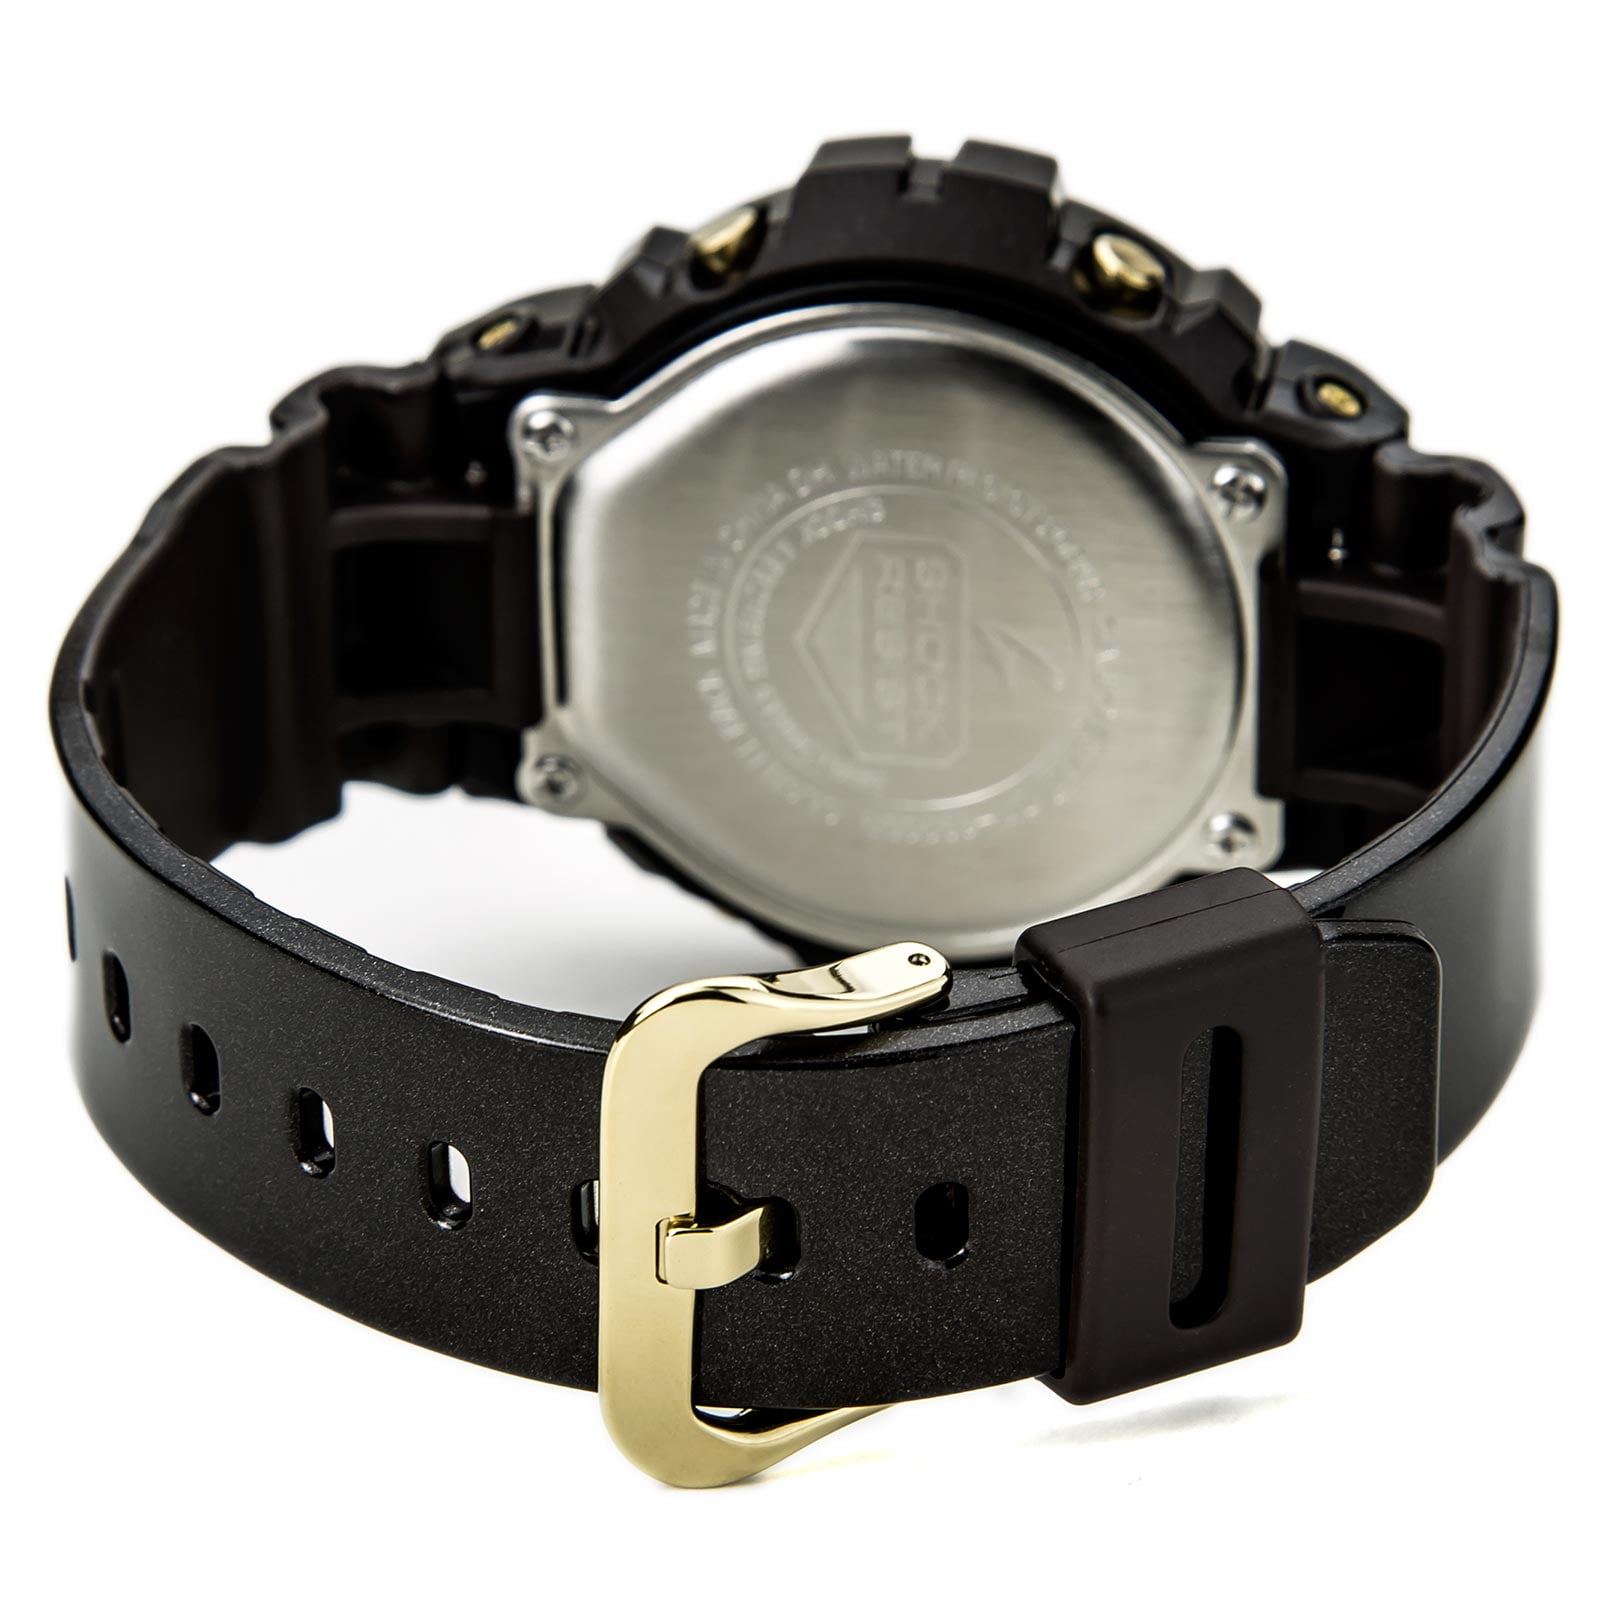 G-Shock Mens Shock Resistant Digital Watch - Black/Gold - DW 